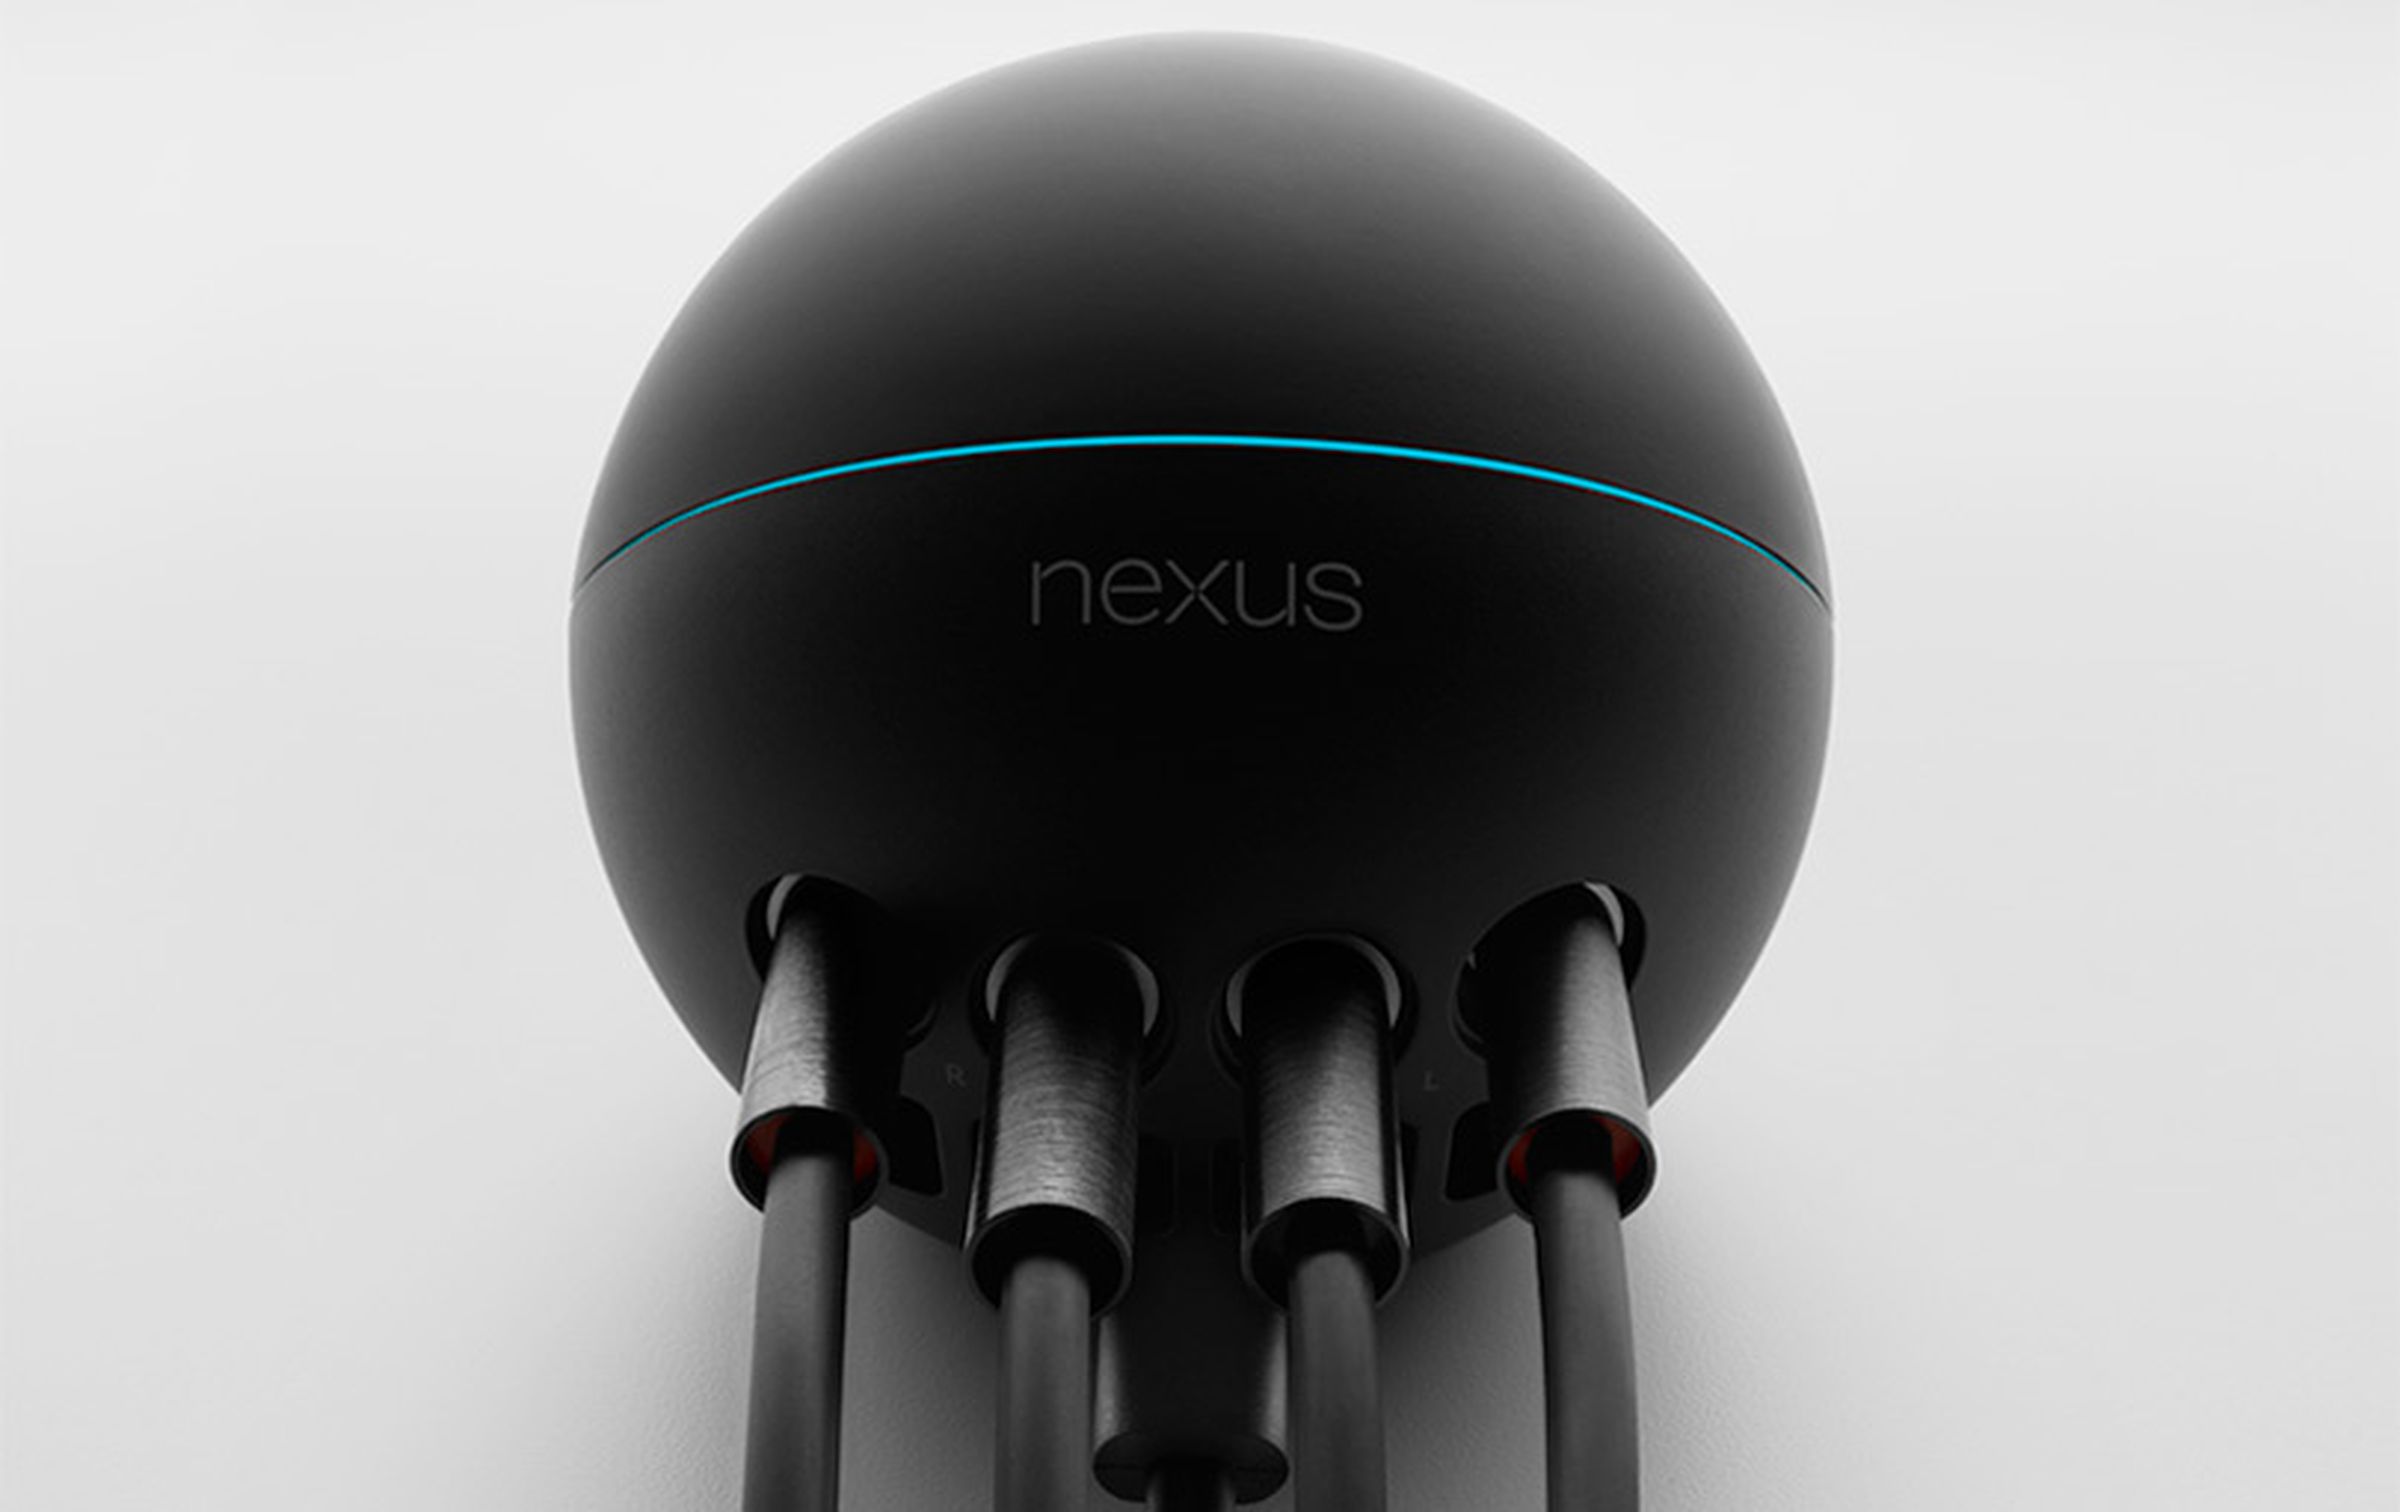 Nexus Q press images from Google I/O 2012